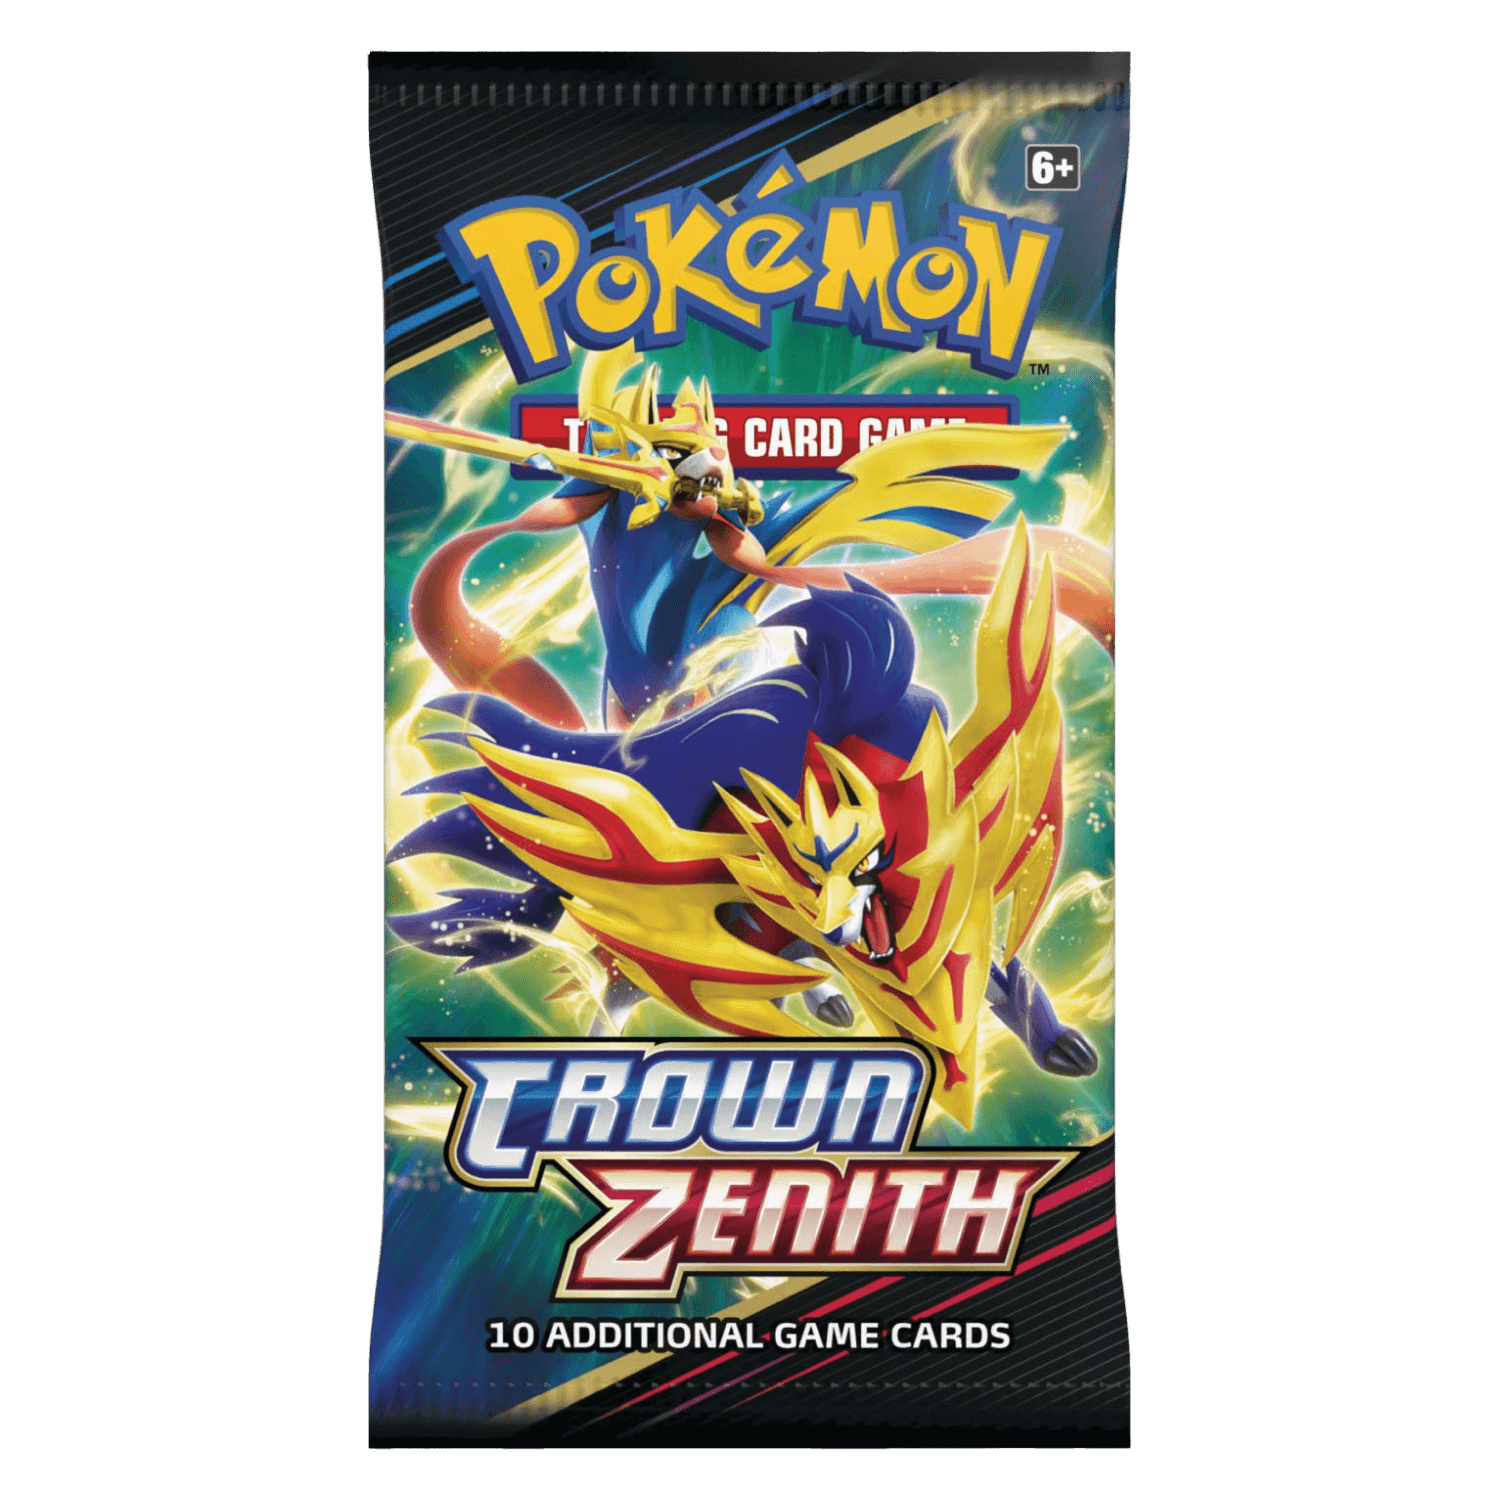 Pokemon TCG: Crown Zenith Regieleki V Collection Box - The Card Vault